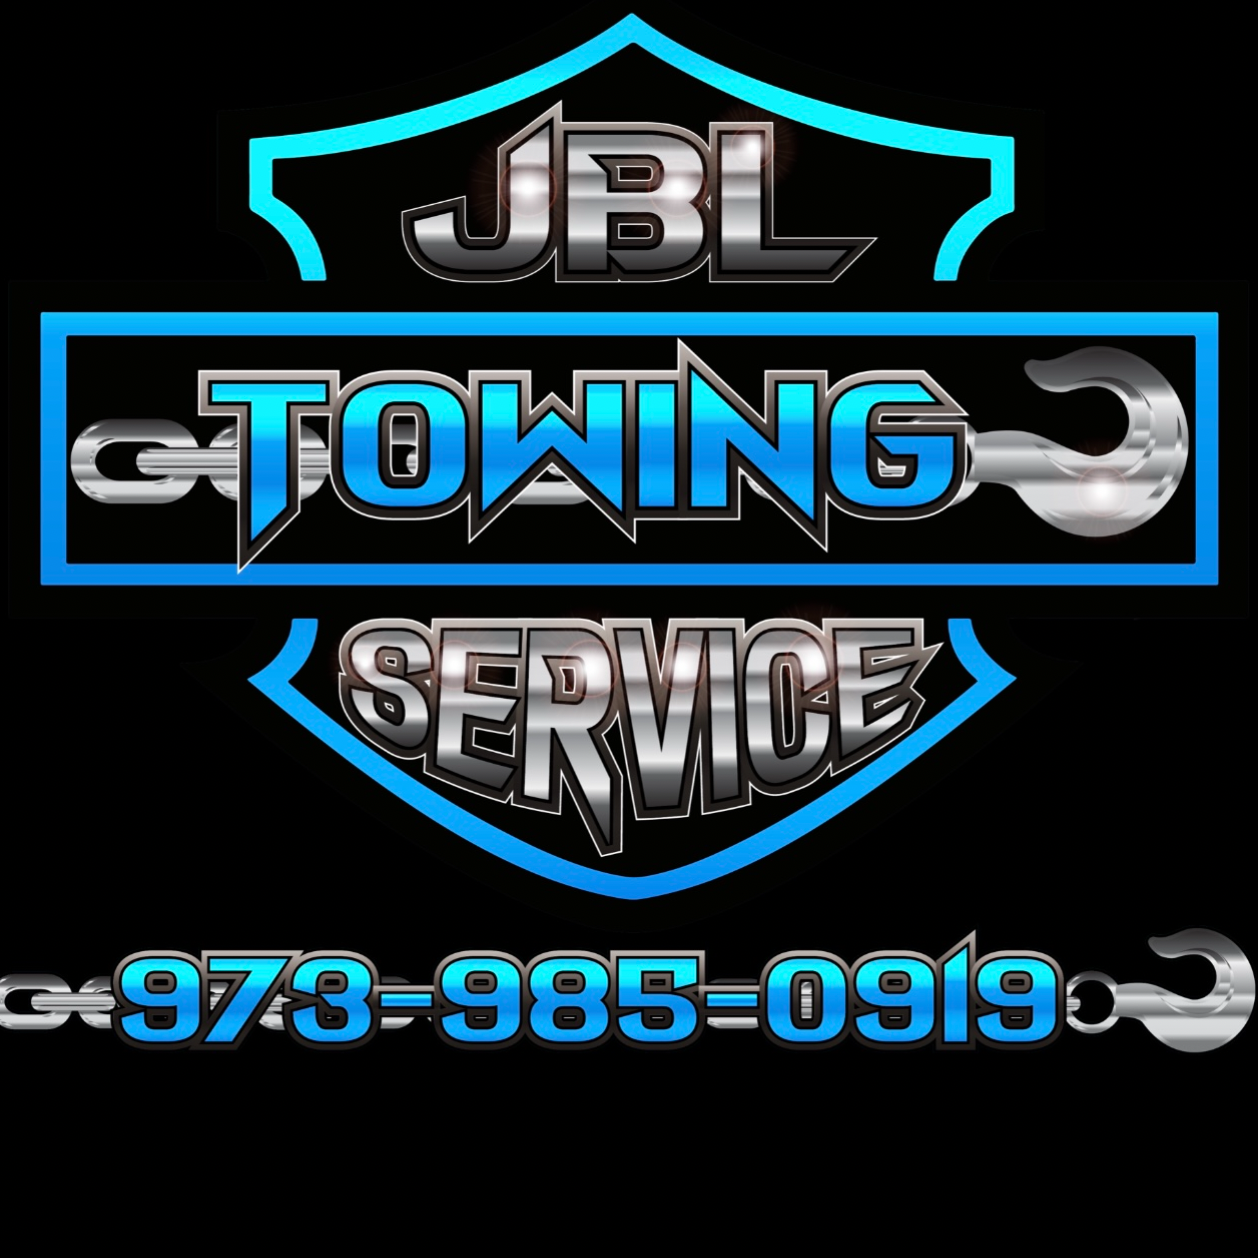 JBL Towing Service  logo